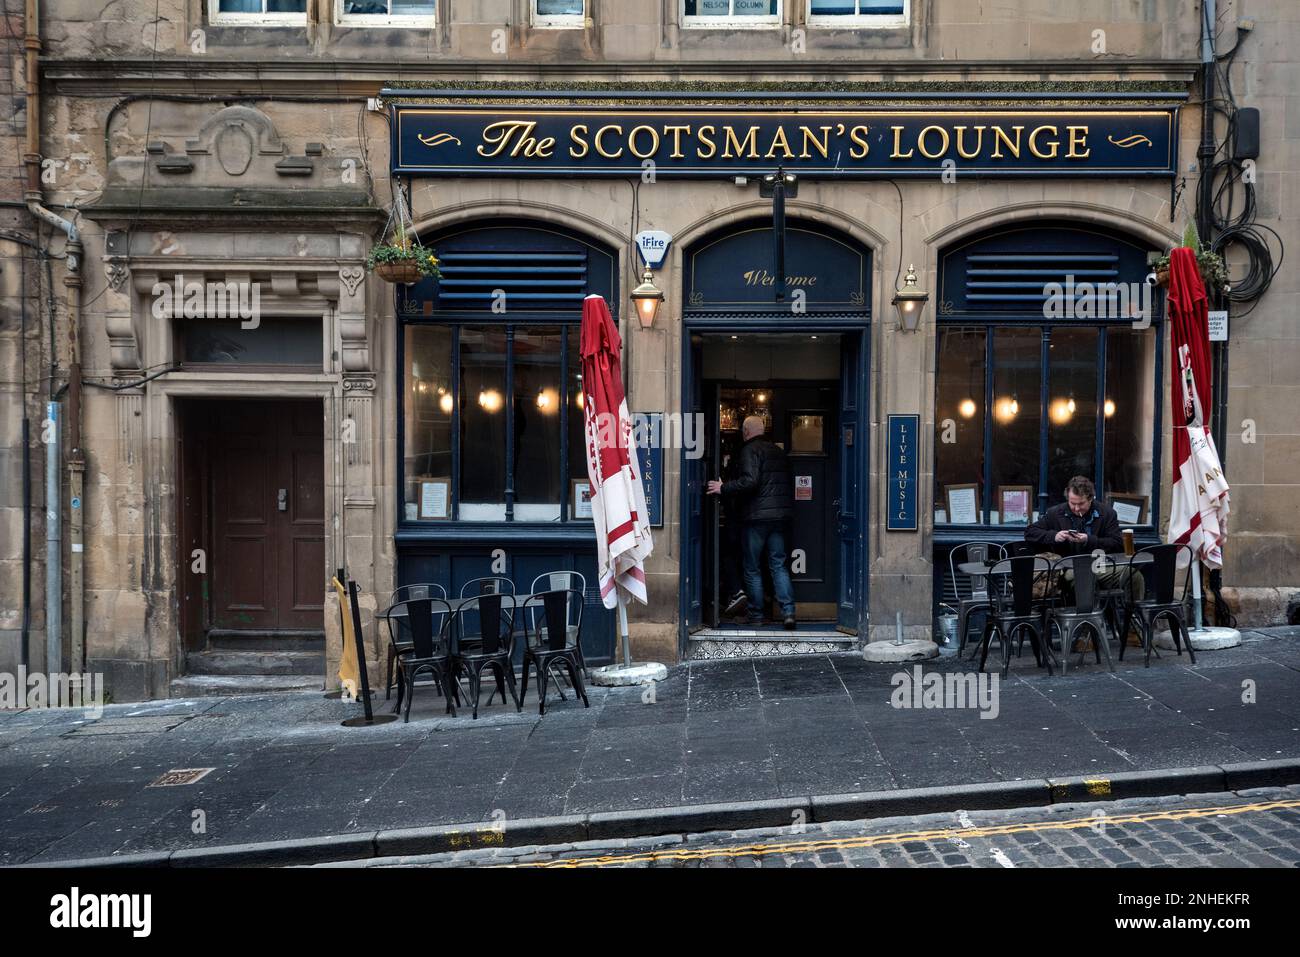 The Scotsman's Lounge public house on Cockburn Street in Edinburgh's Old Town. Stock Photo